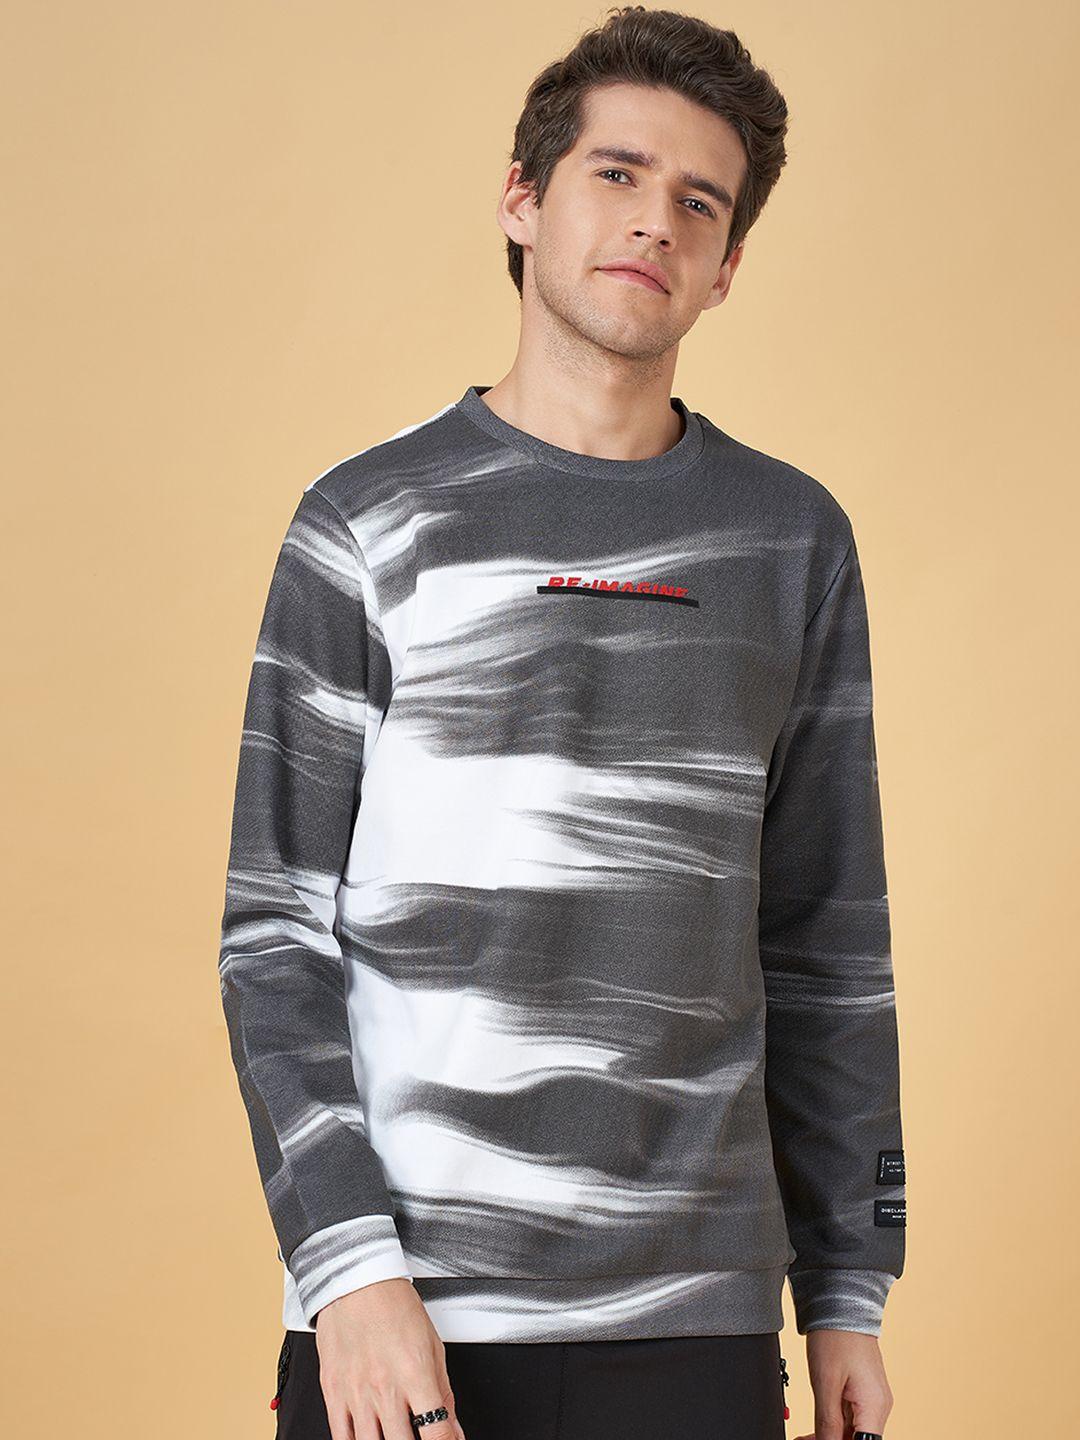 street 808 by pantaloons abstract printed long sleeves sweatshirt